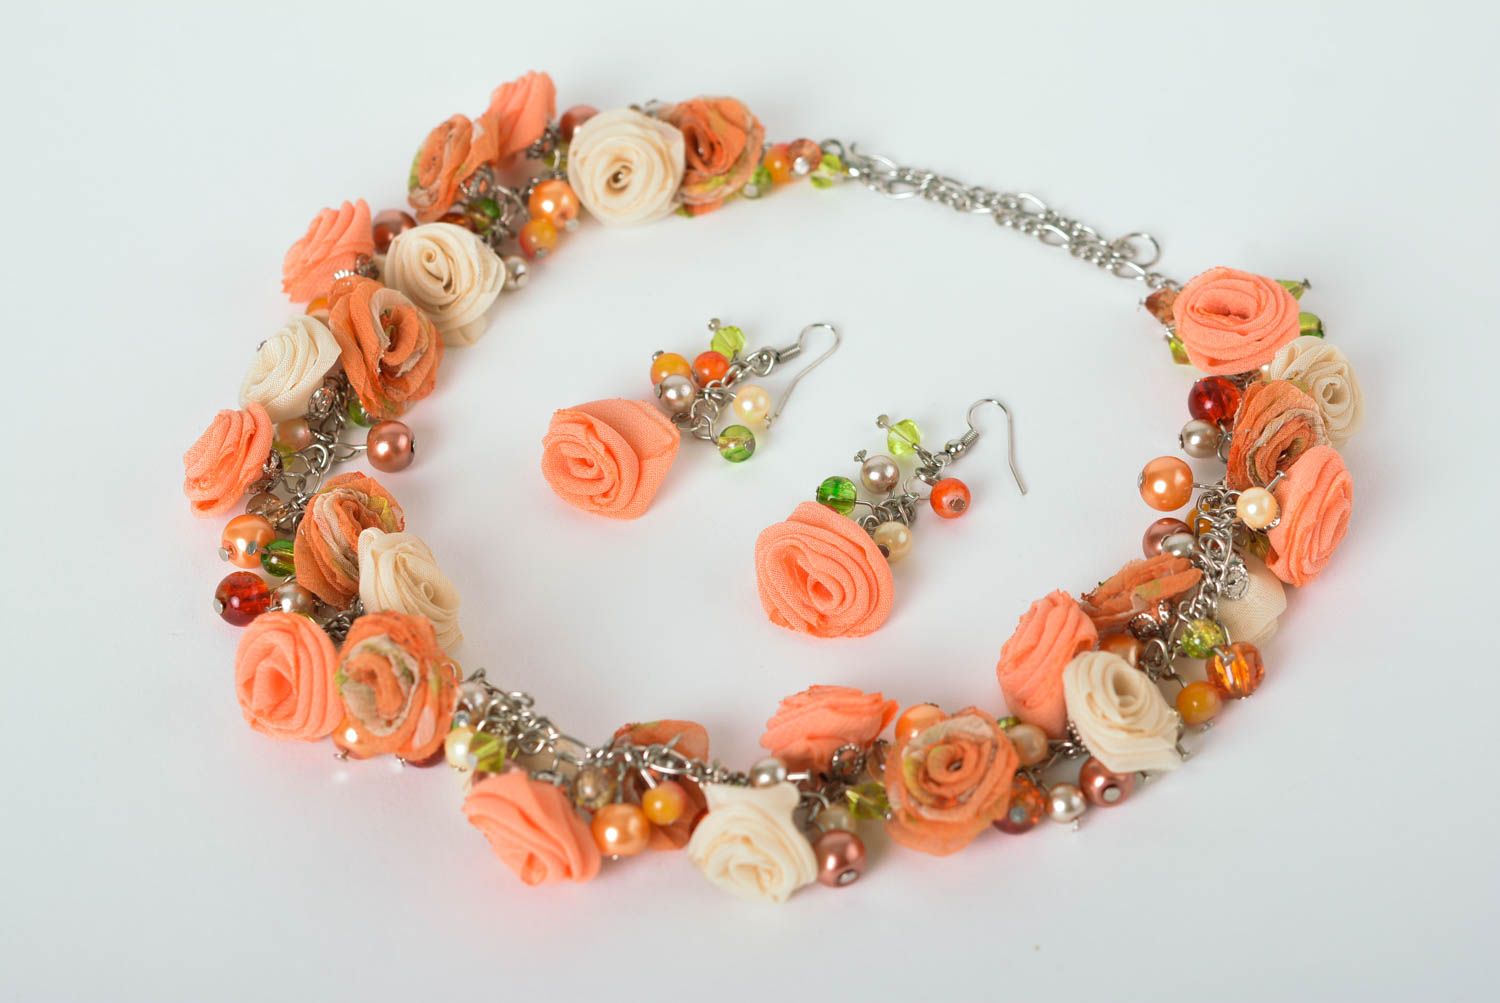 Handmade earrings designer necklace unusual gift ideas for women jewelry set photo 1